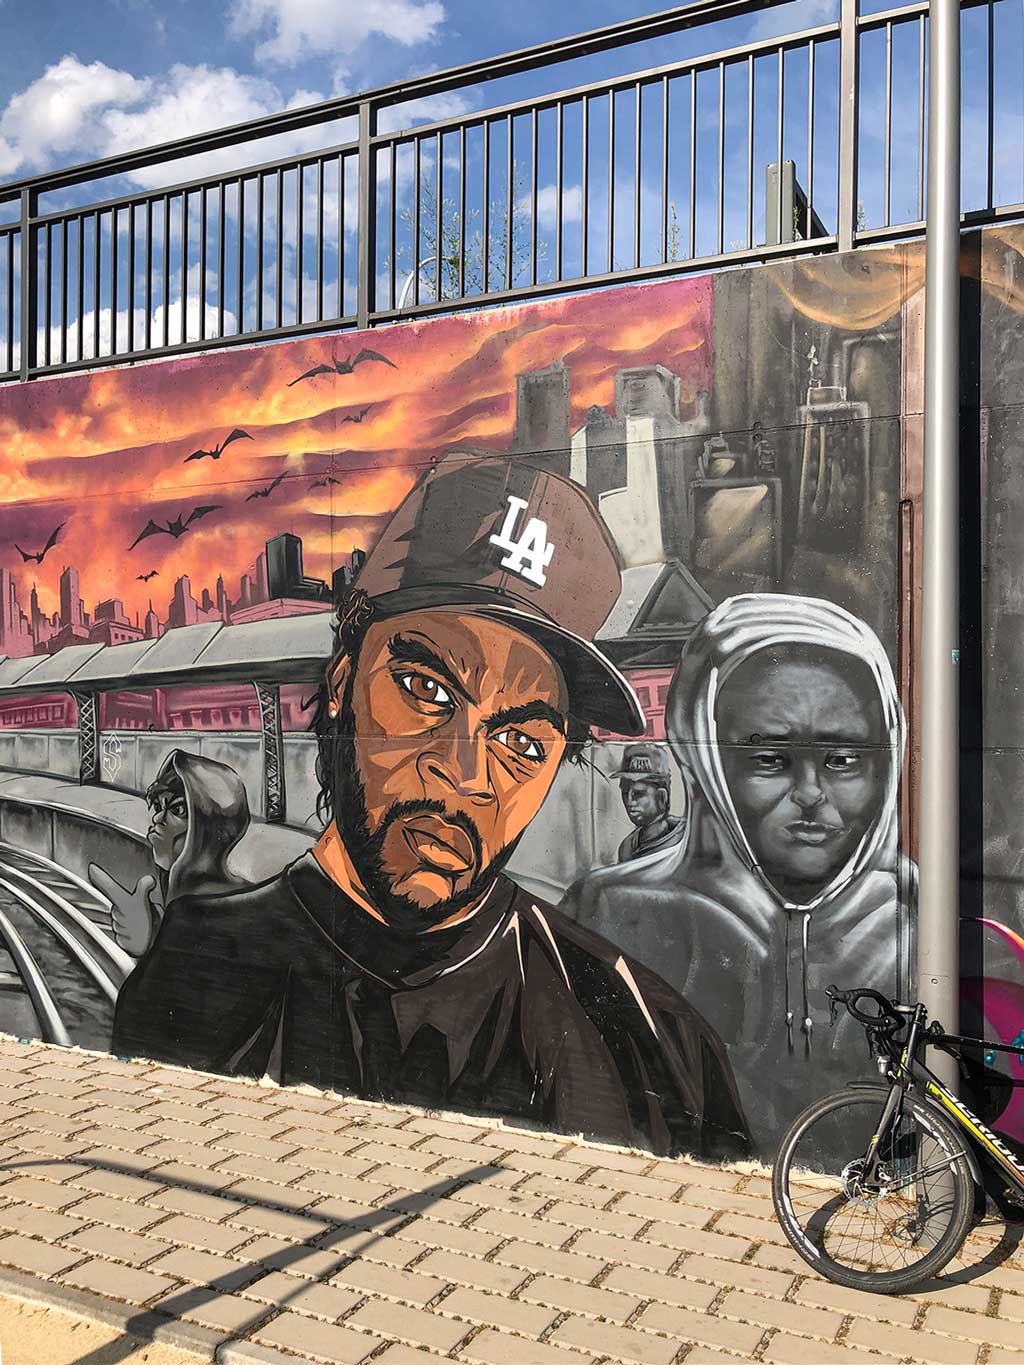 Meeting of Styles in Wiesbaden - Wandbild zeigt US-Rapper Ice Cube